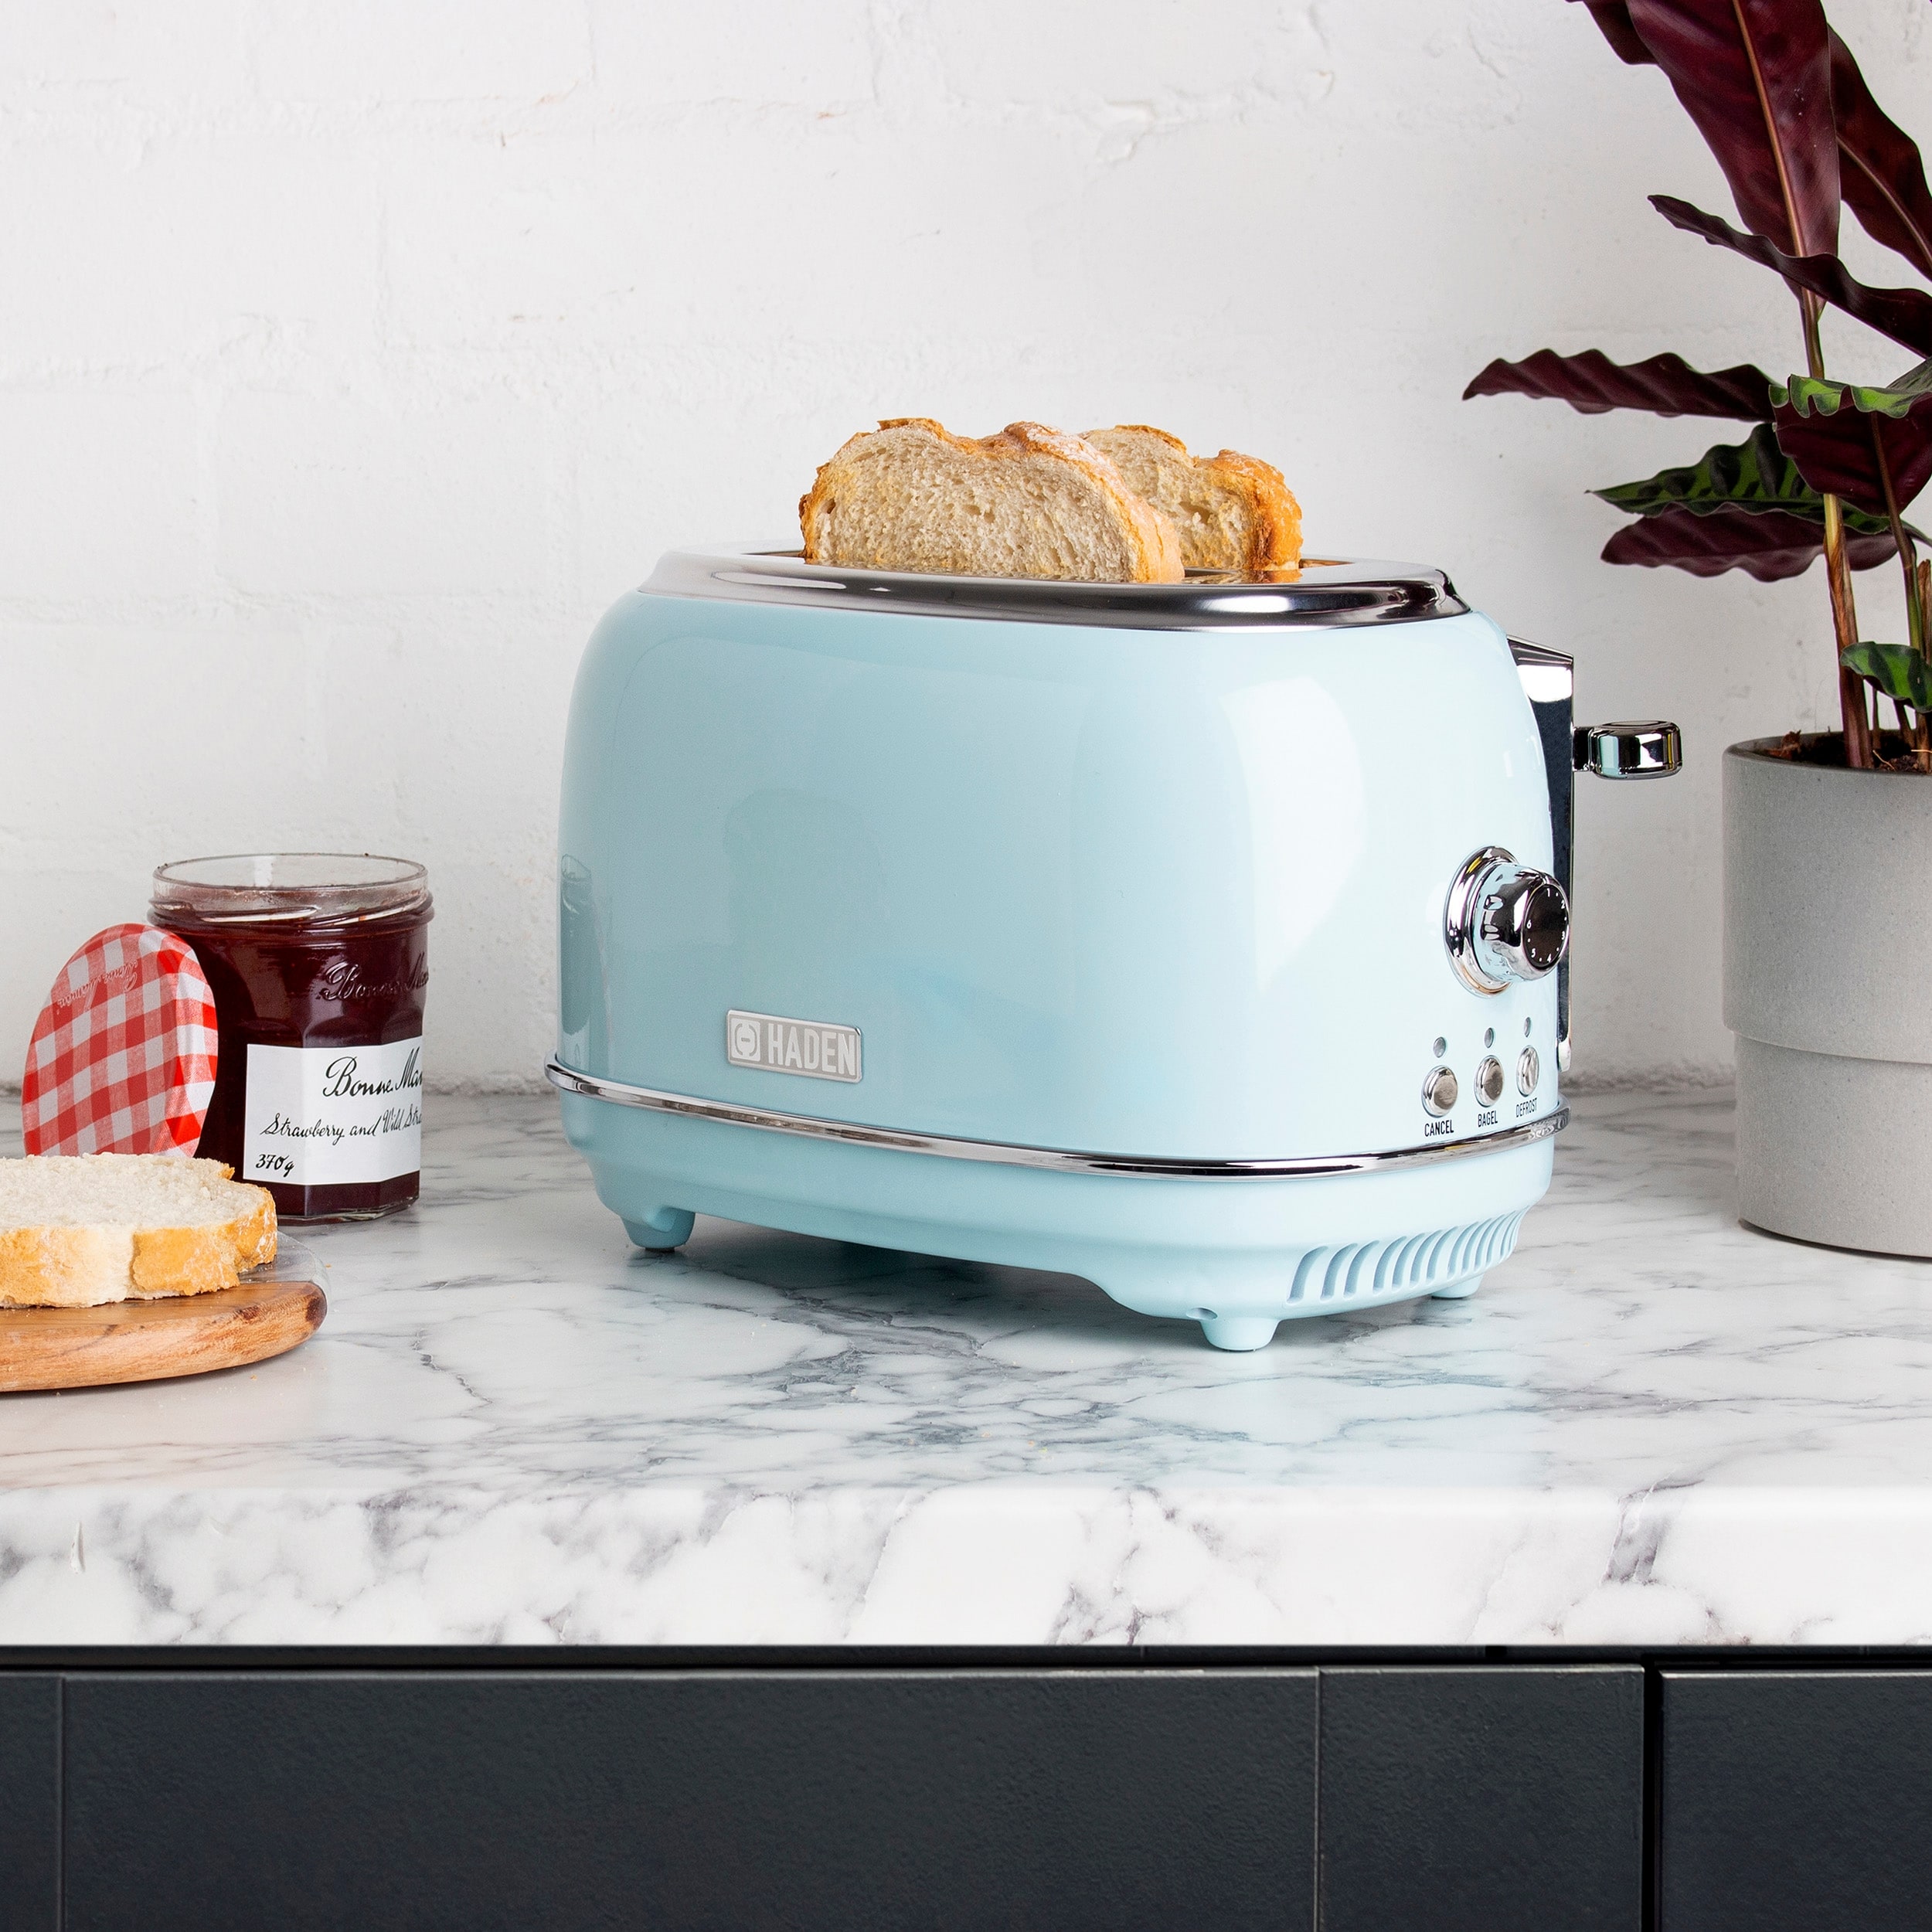 Haden Heritage 4-Slice Pink 1500-Watt Toaster in the Toasters